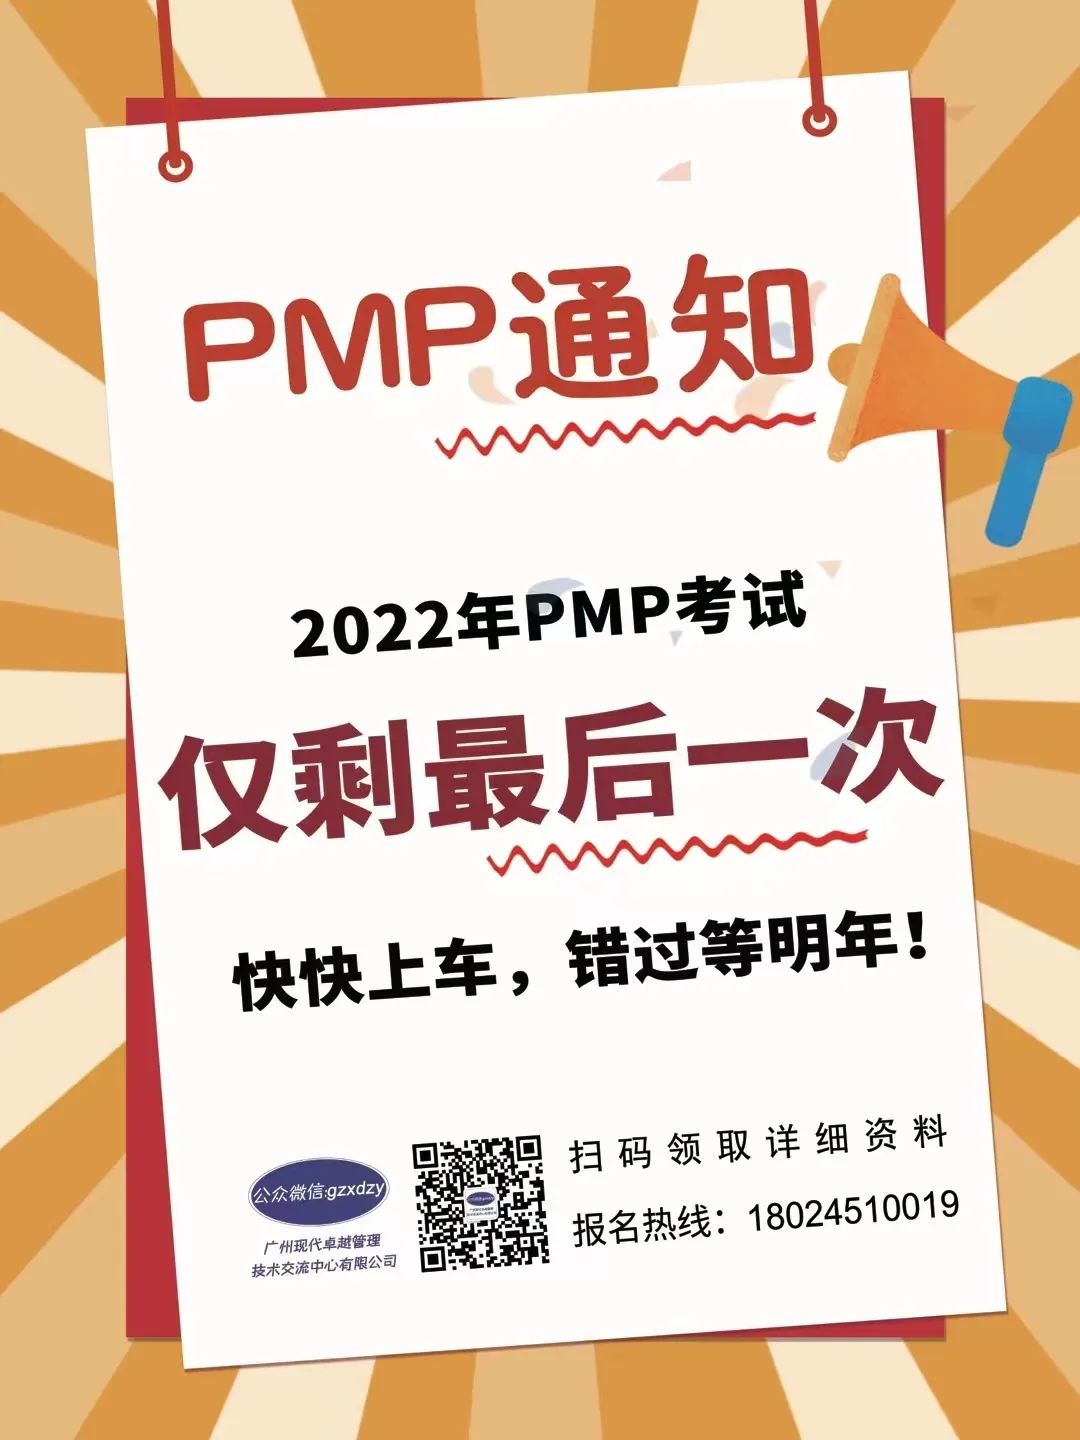 PMI官方解读新版PMBOK中的项目经理人才三角